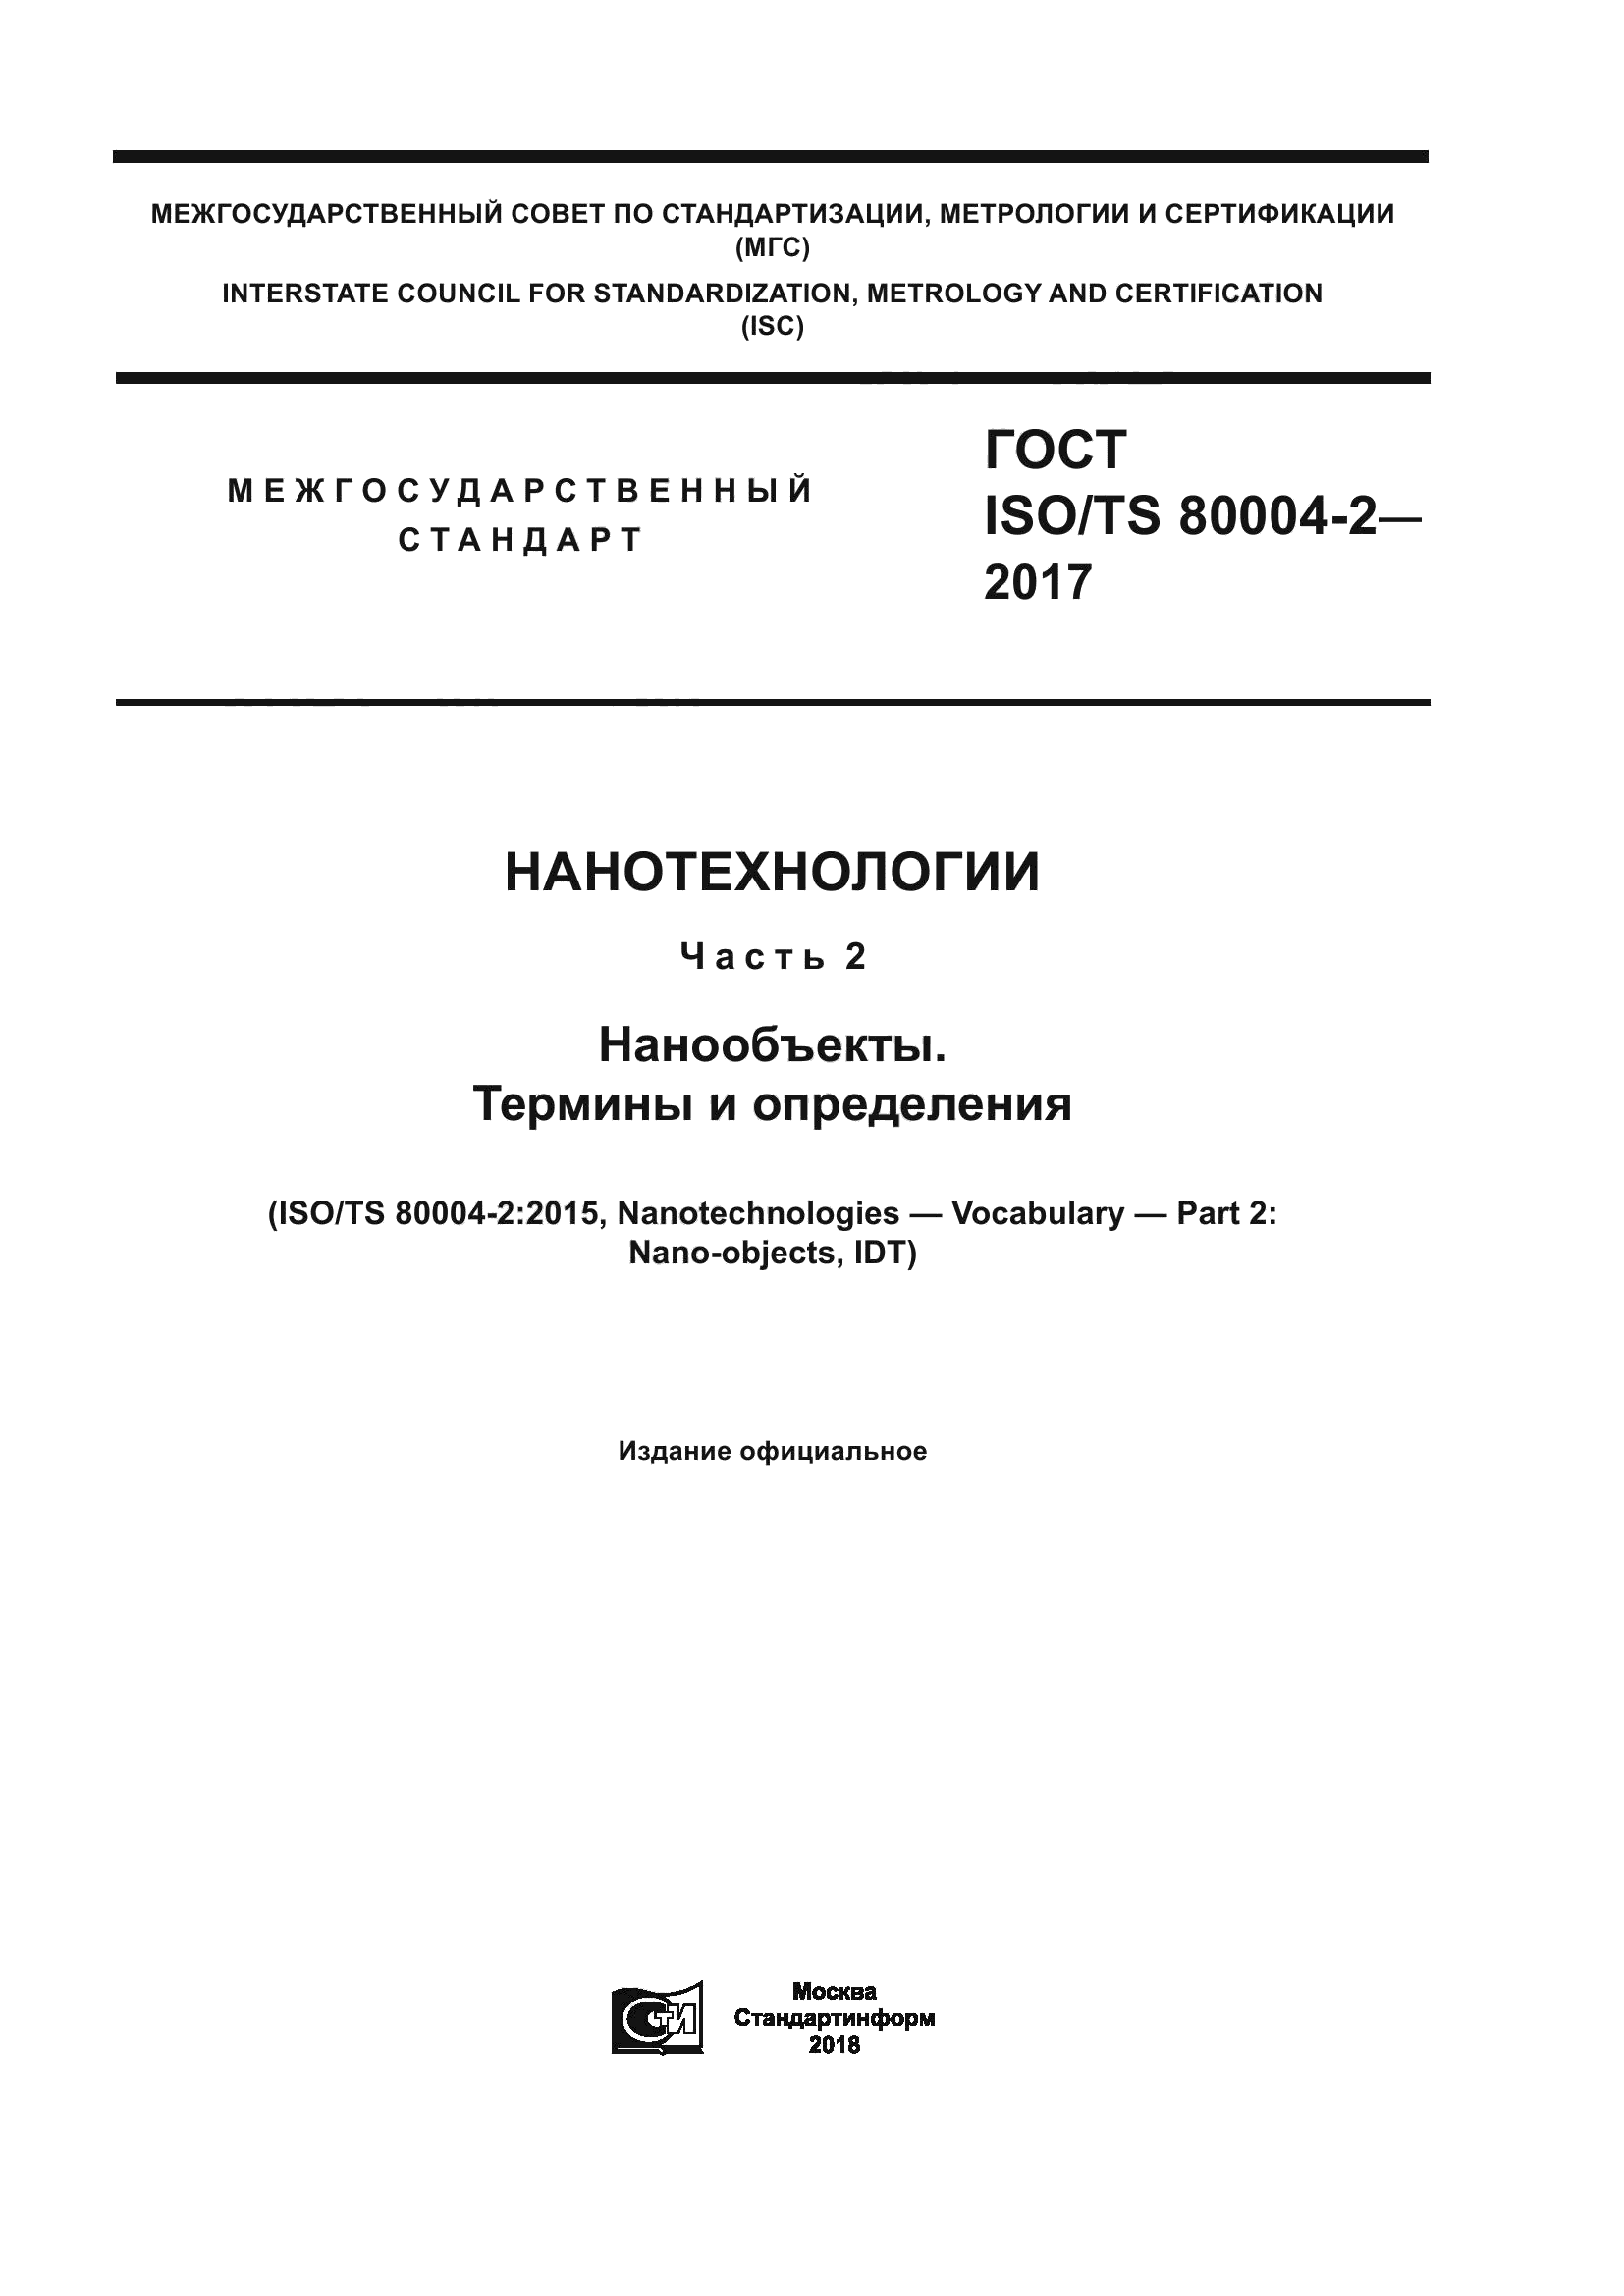 ГОСТ ISO/TS 80004-2-2017